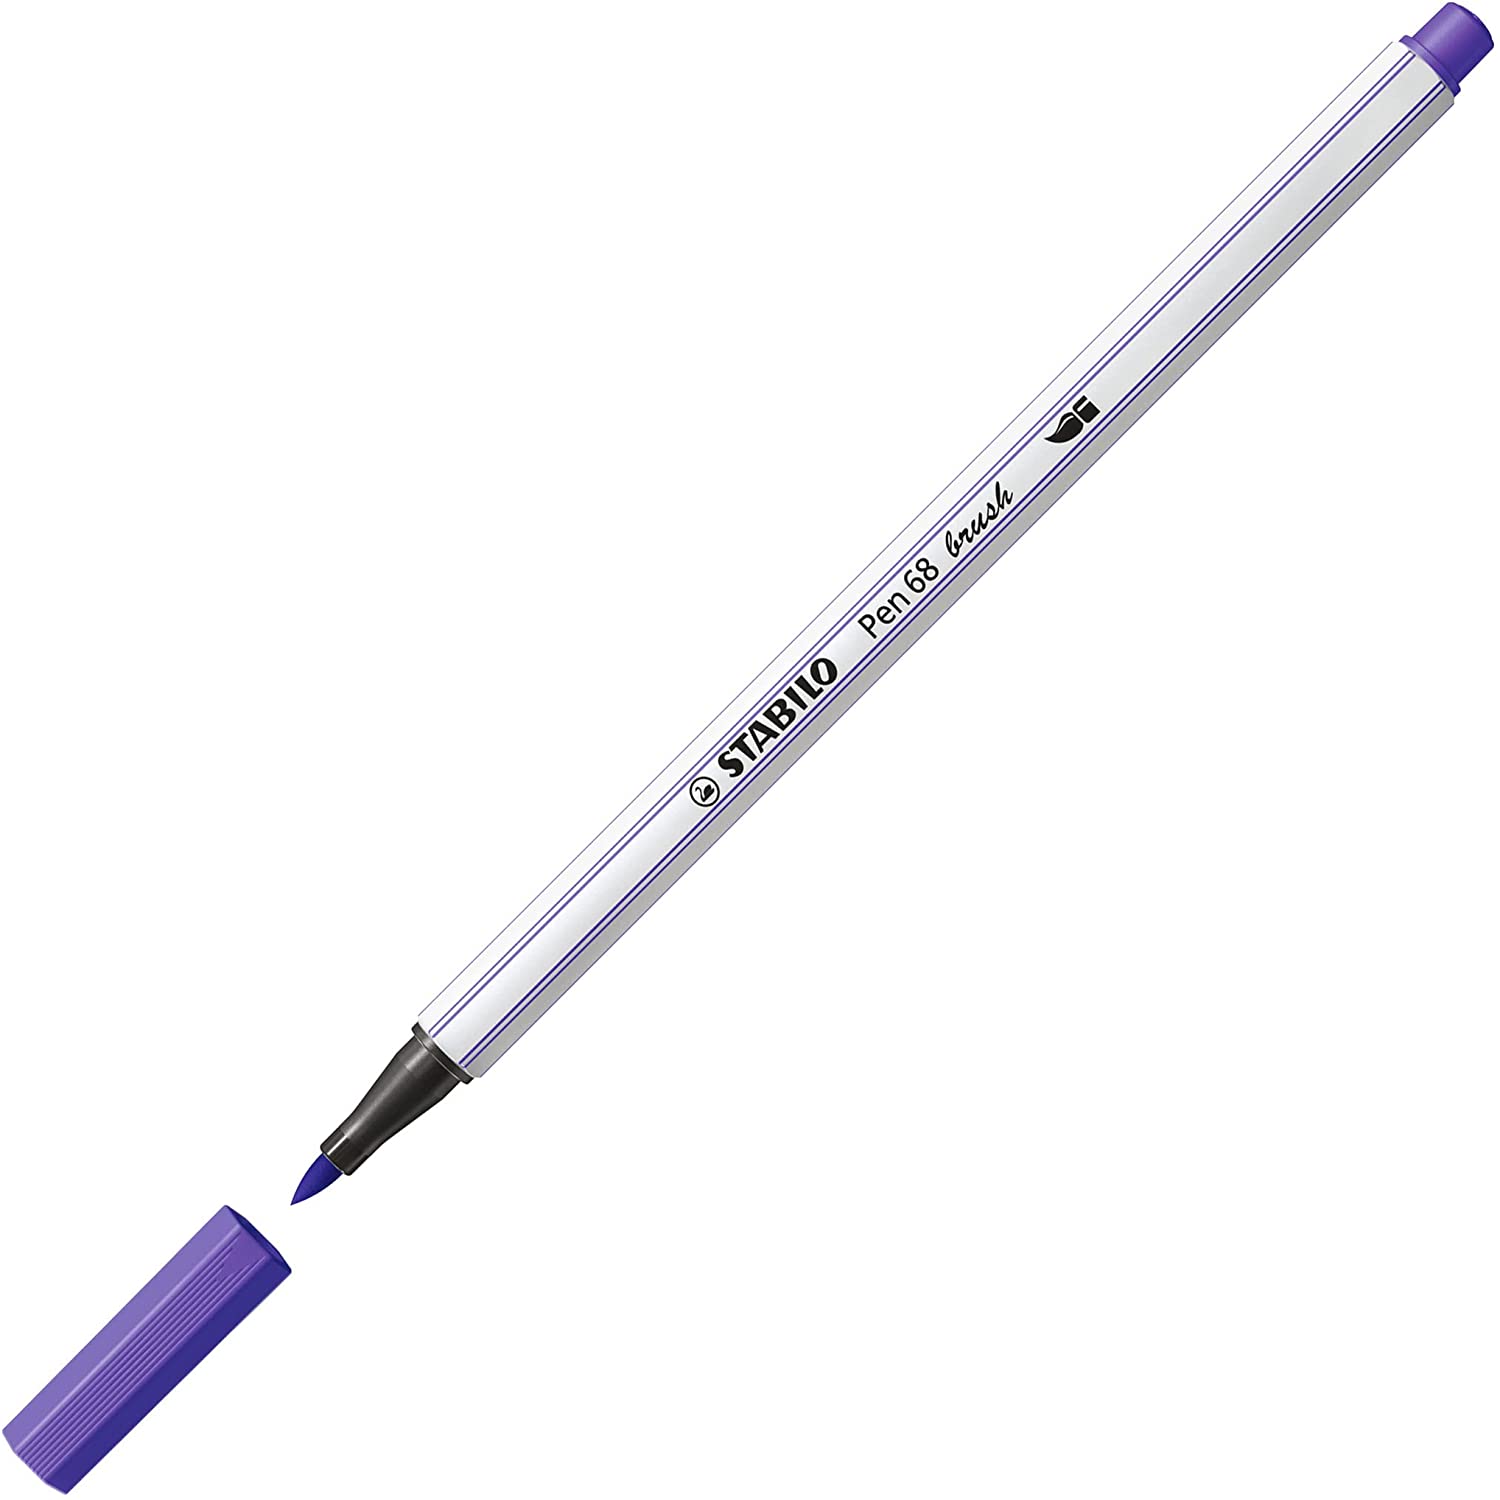 Pildspalvu komplekts STABILO Pen 68 Brush ARTY |24 krāsas